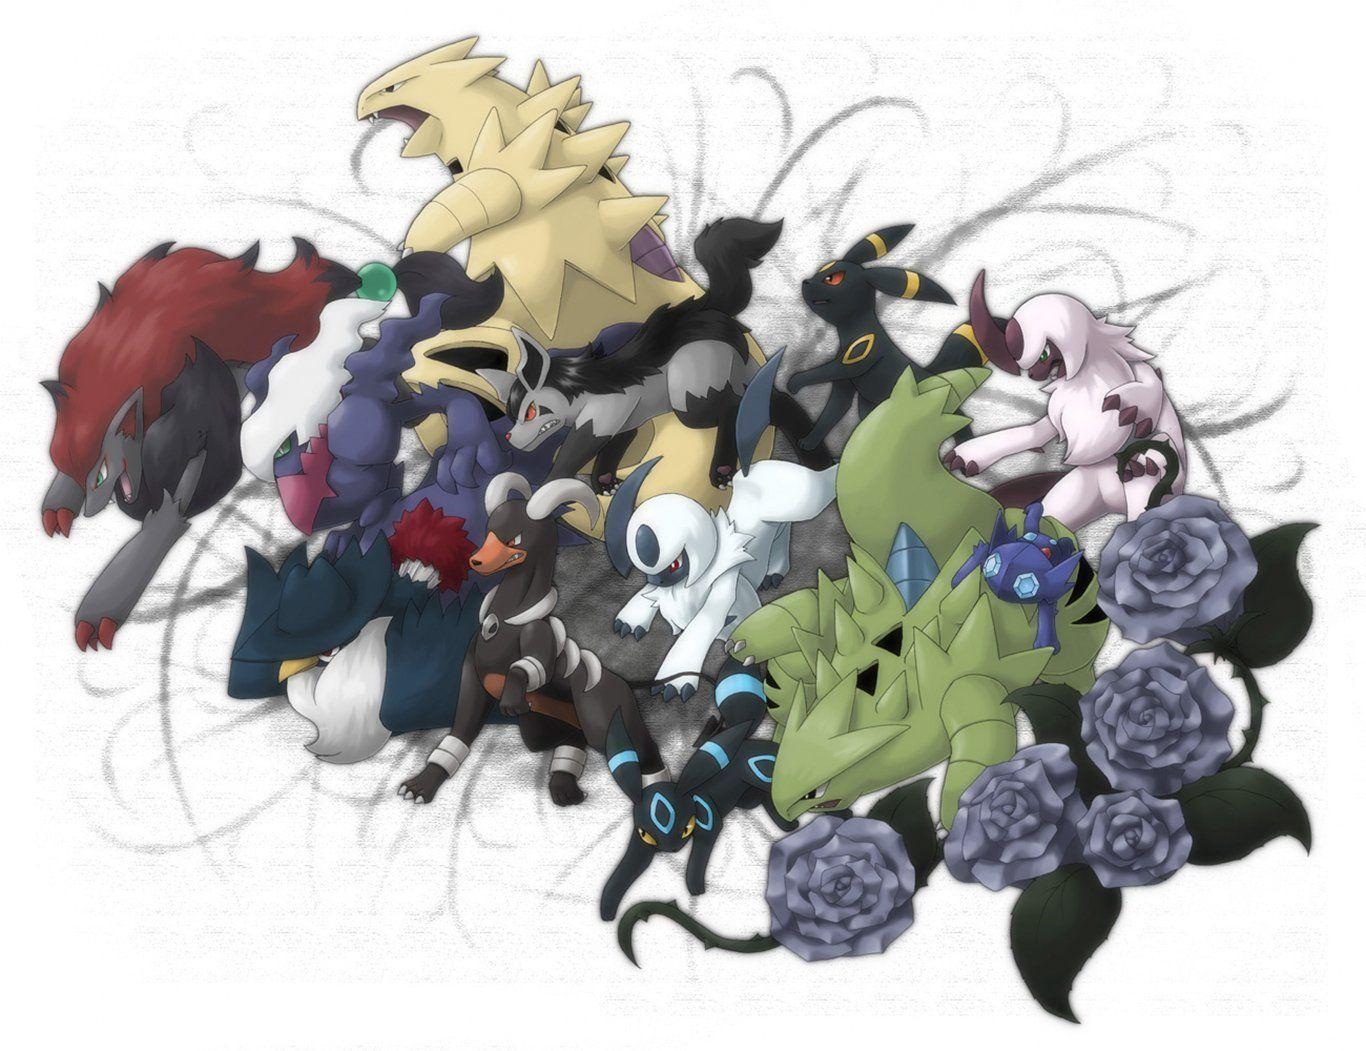 Zoroark (Pokémon) HD Wallpaper and Background Image